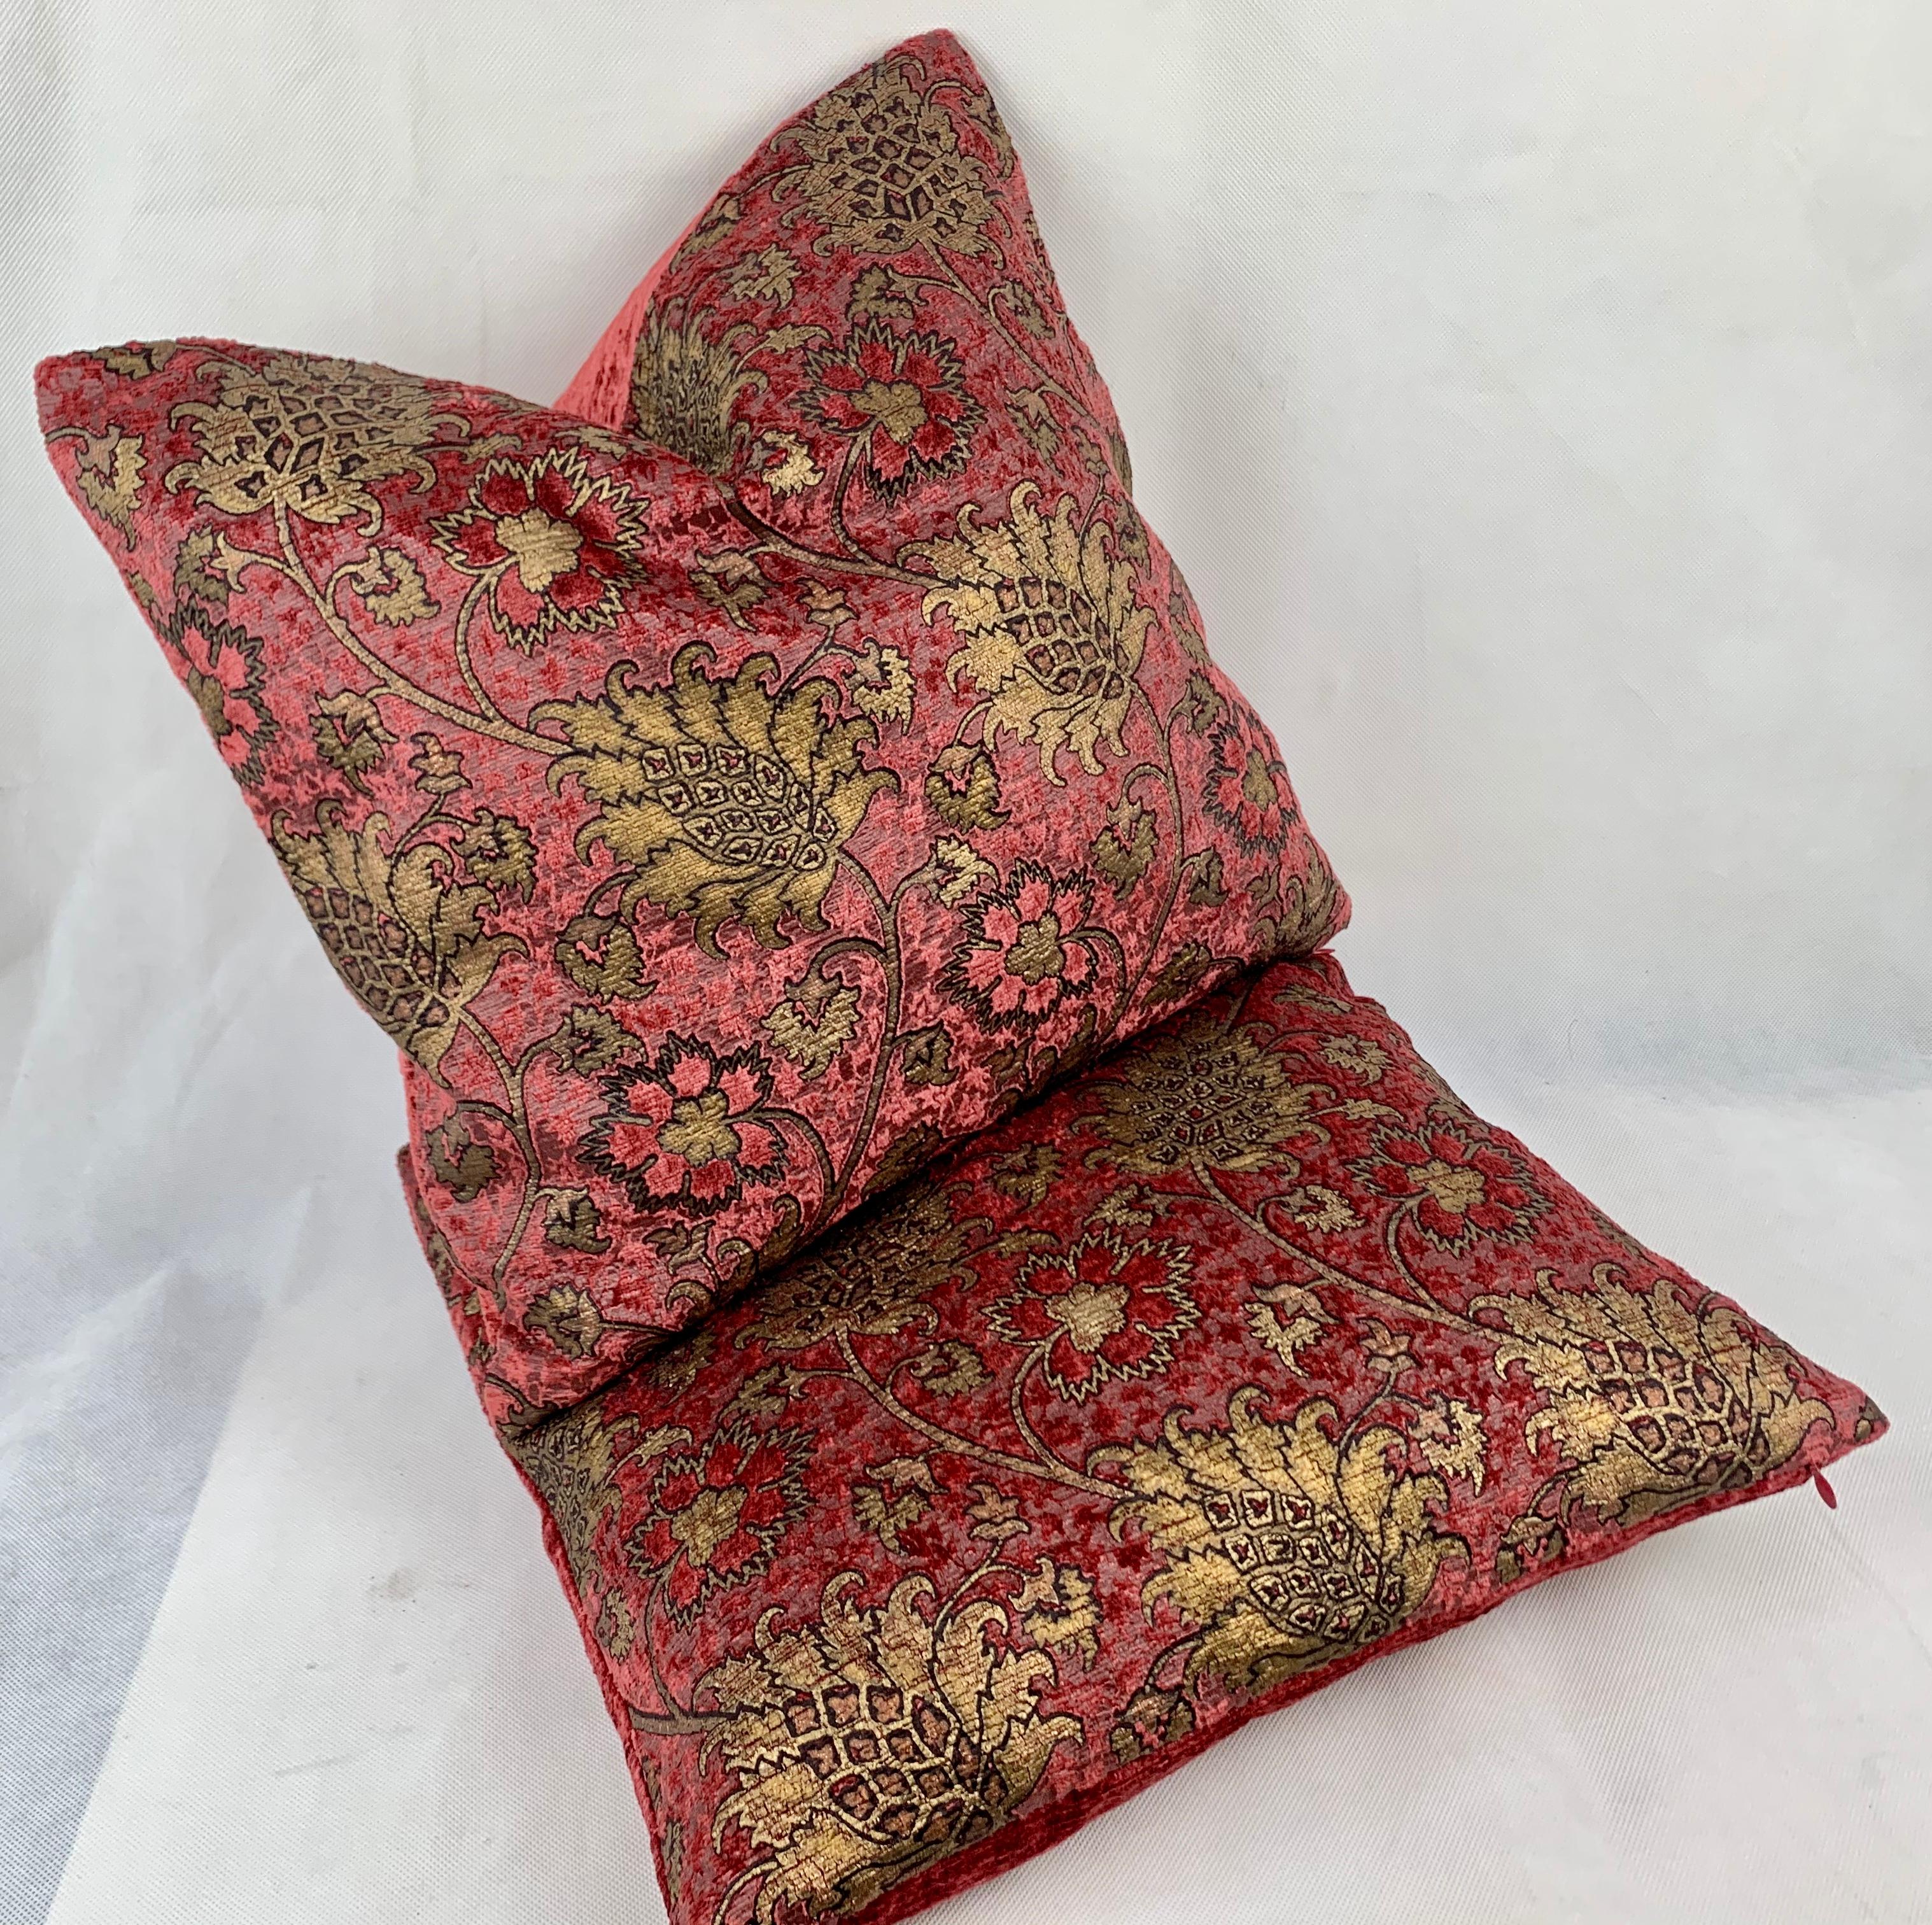 Rococo Revival Fortuny/Venetia Studium Square Velvet Cushions. The Bizarre Pattern